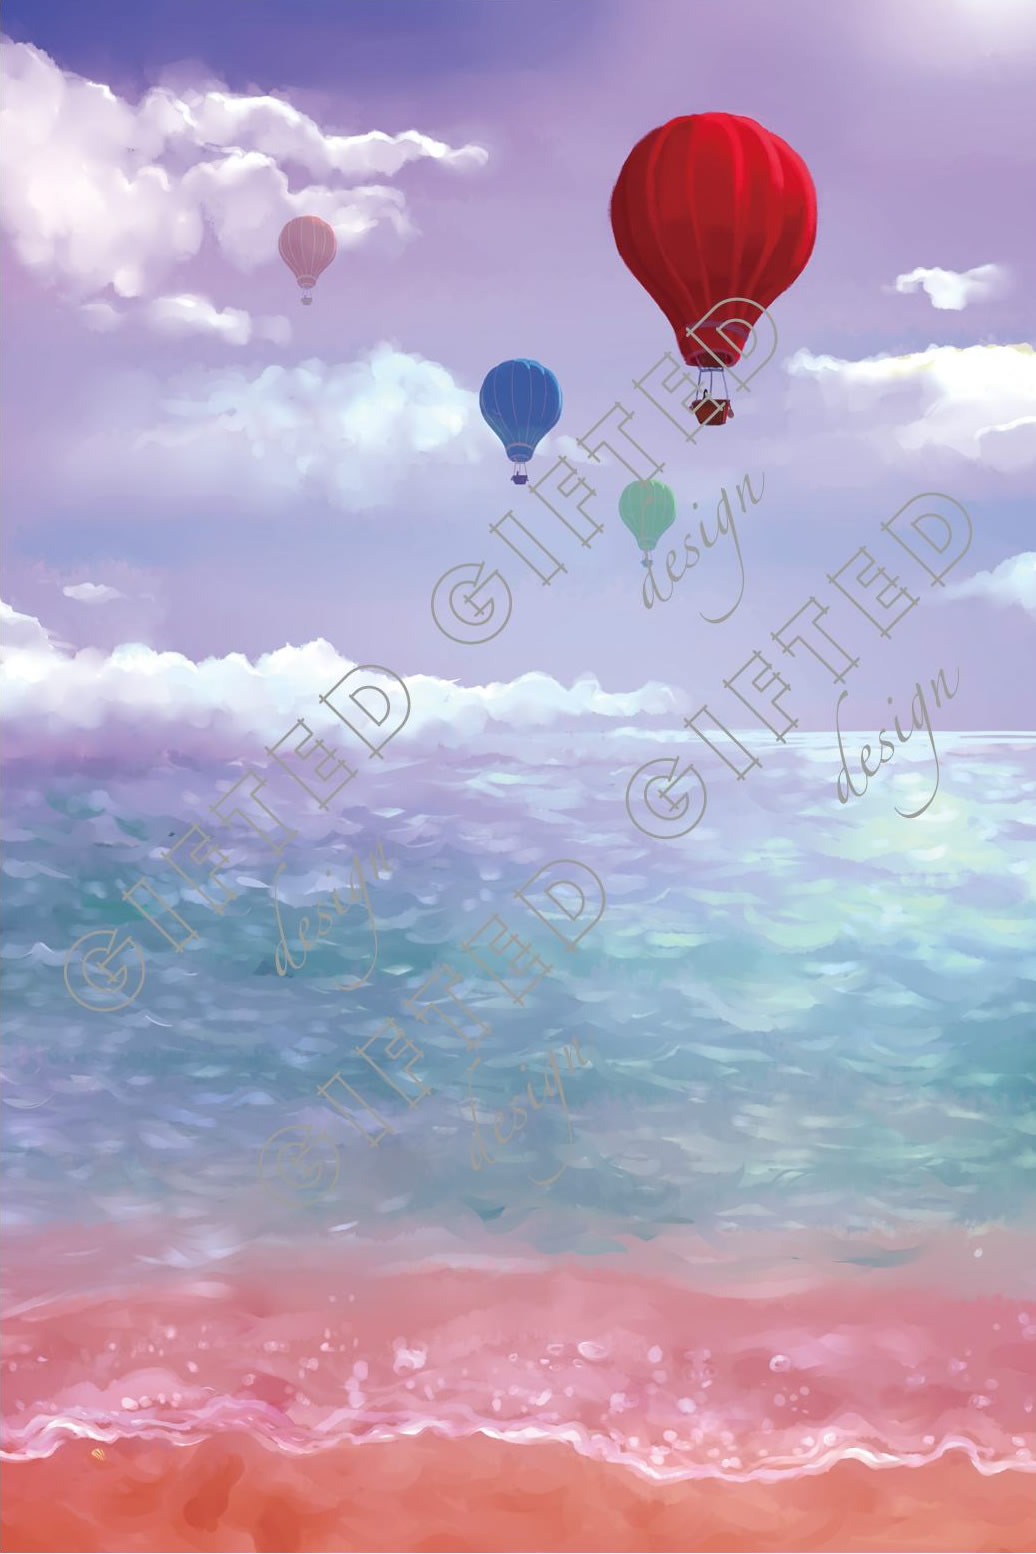 Hot air balloons over the beach